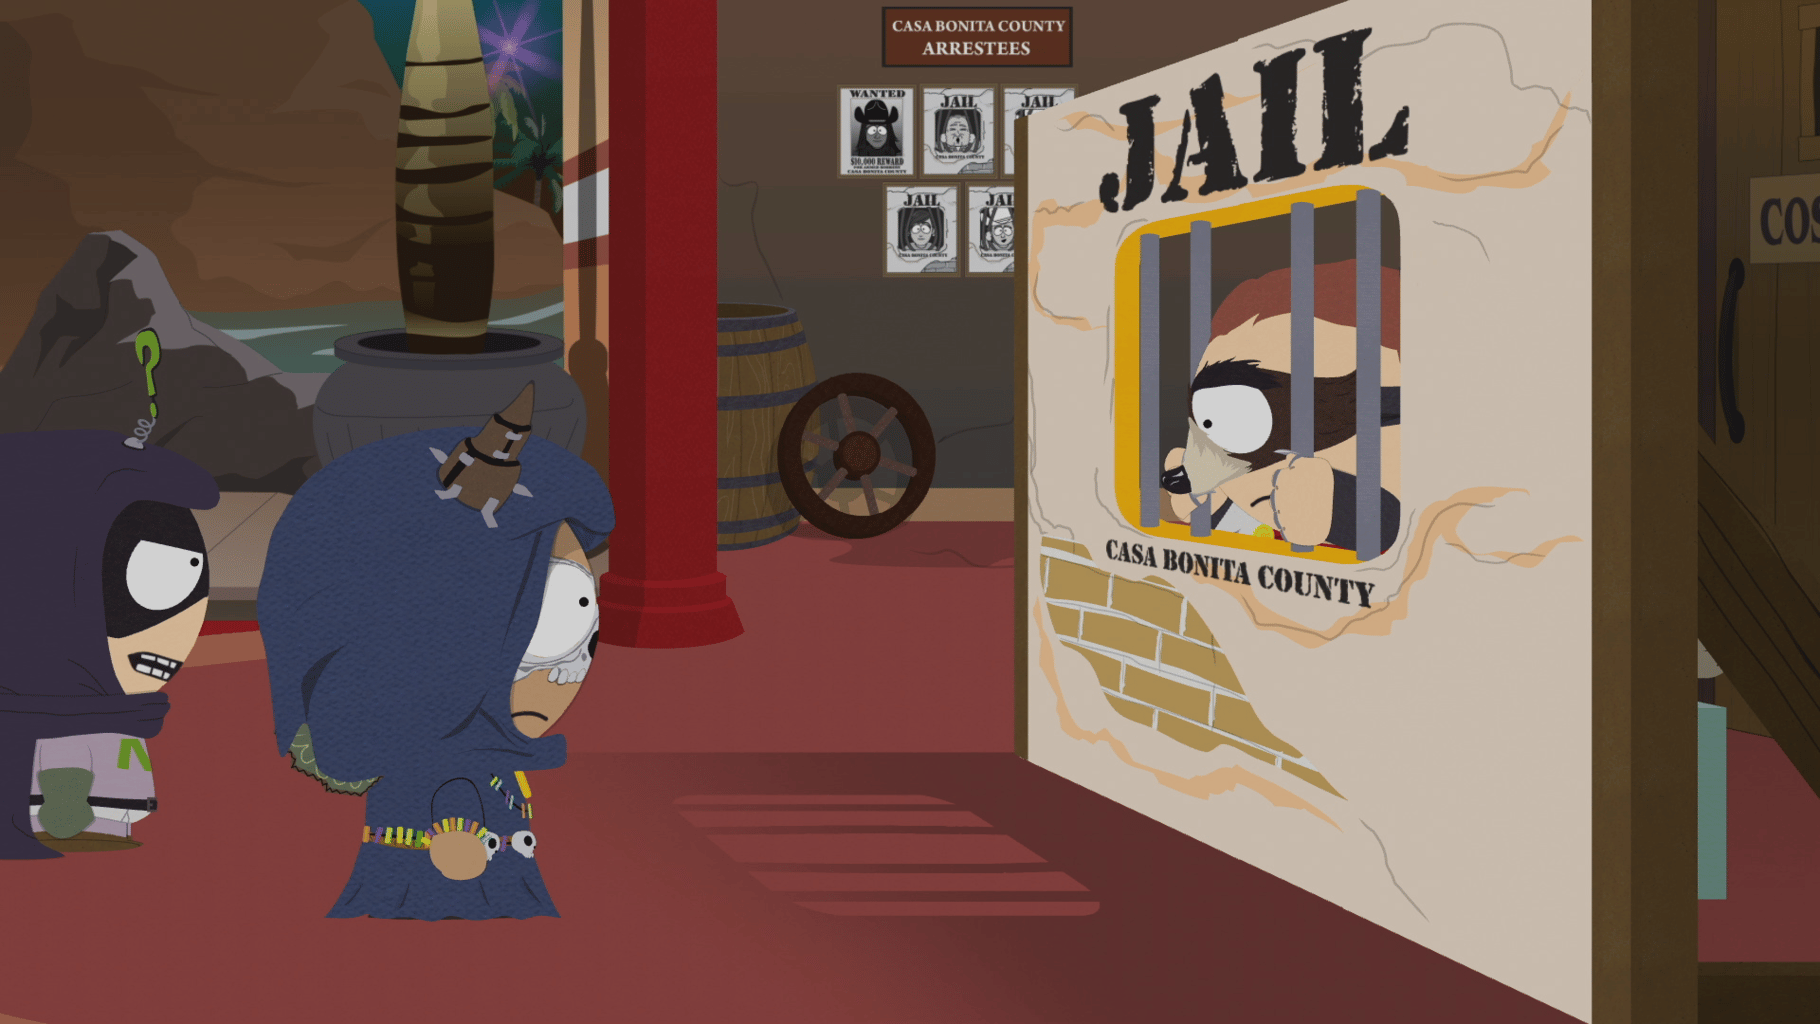 South Park: The Fractured But Whole - From Dusk Till Casa Bonita screenshot